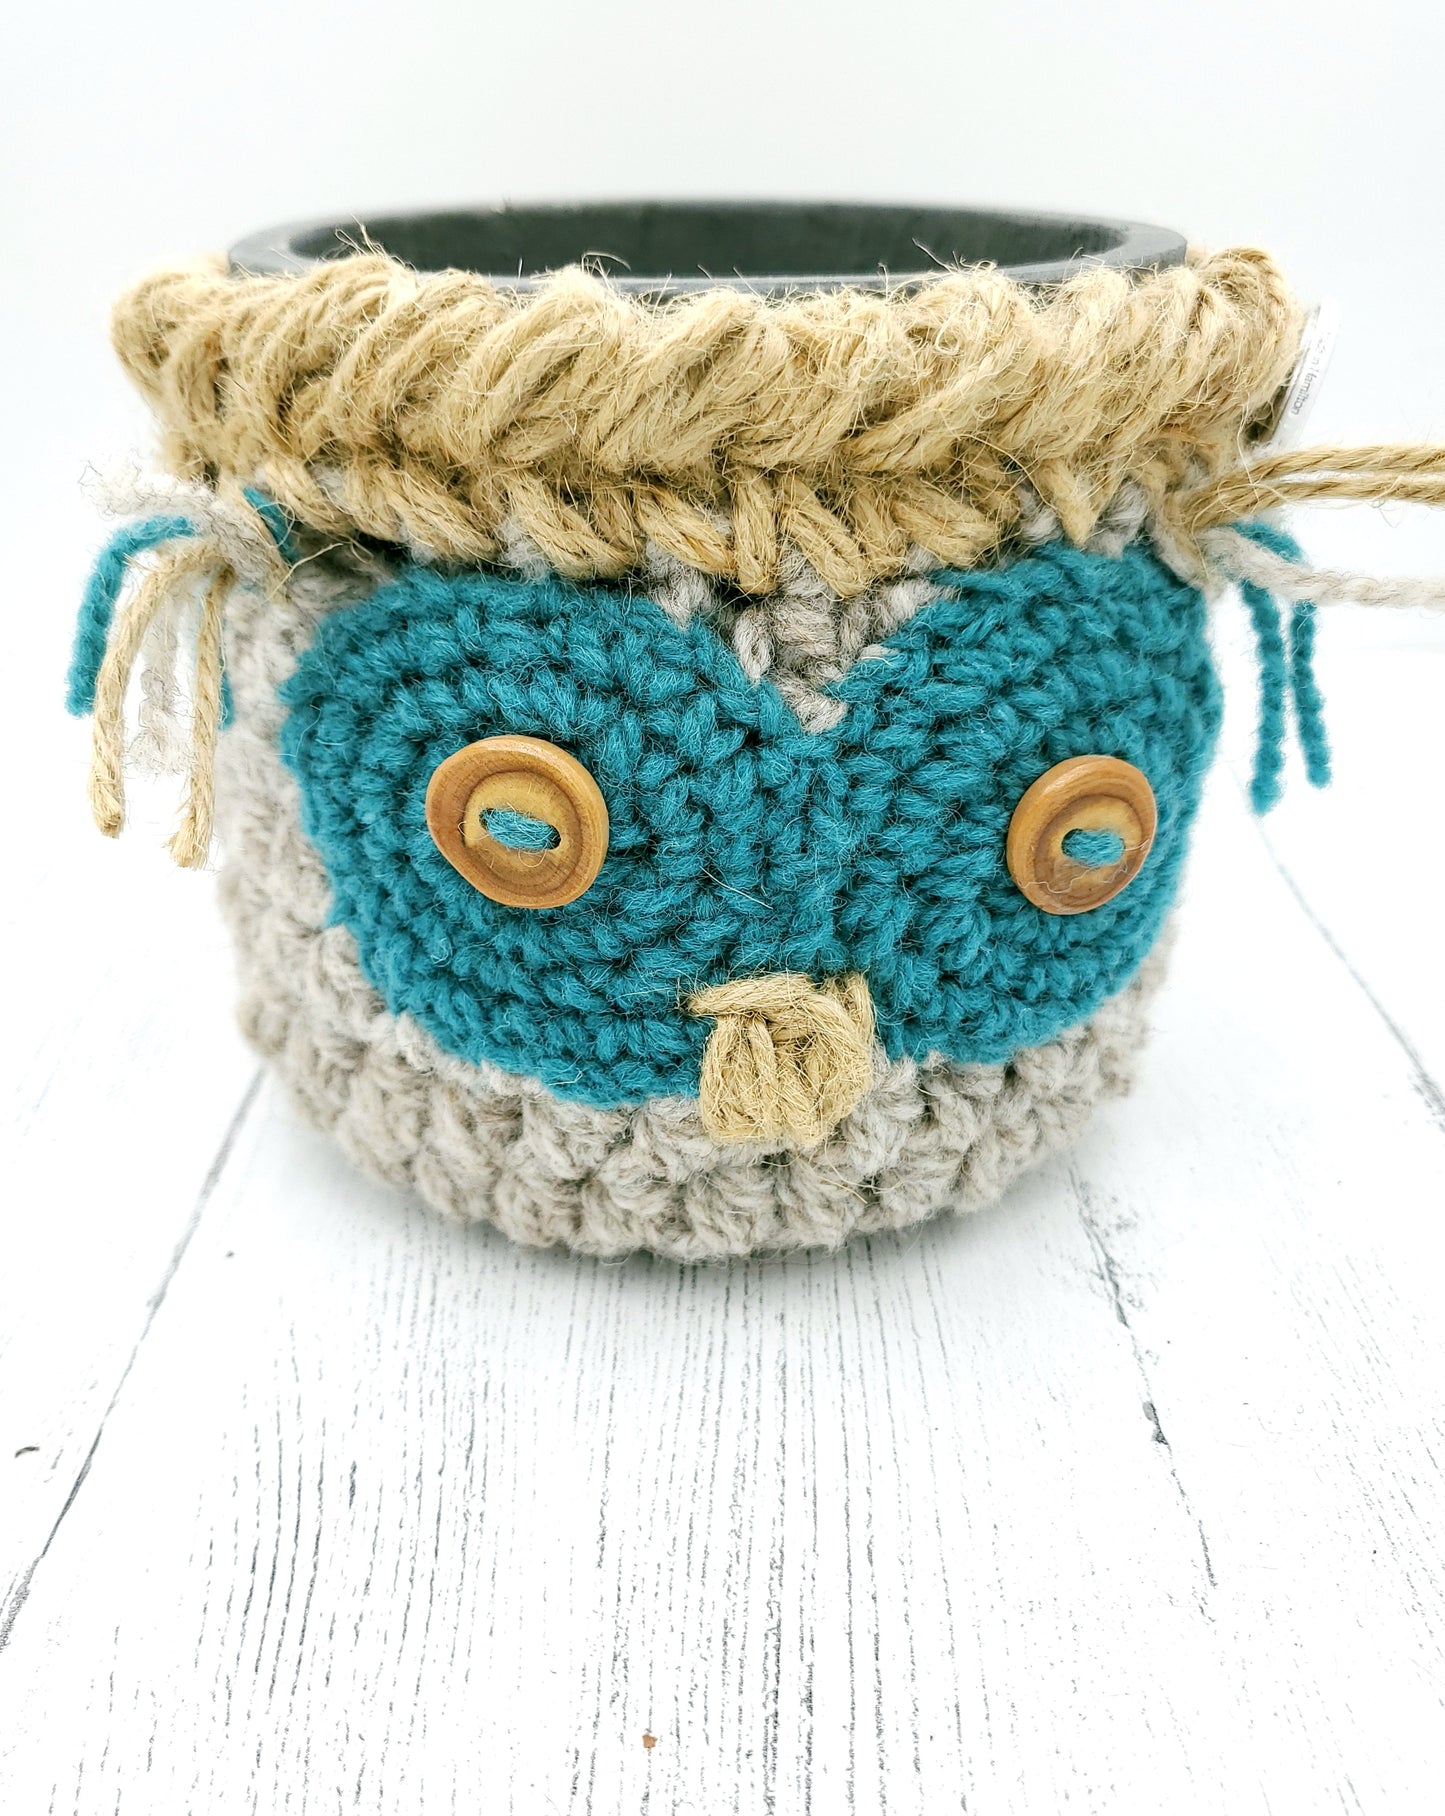 Crochet Owl Planters